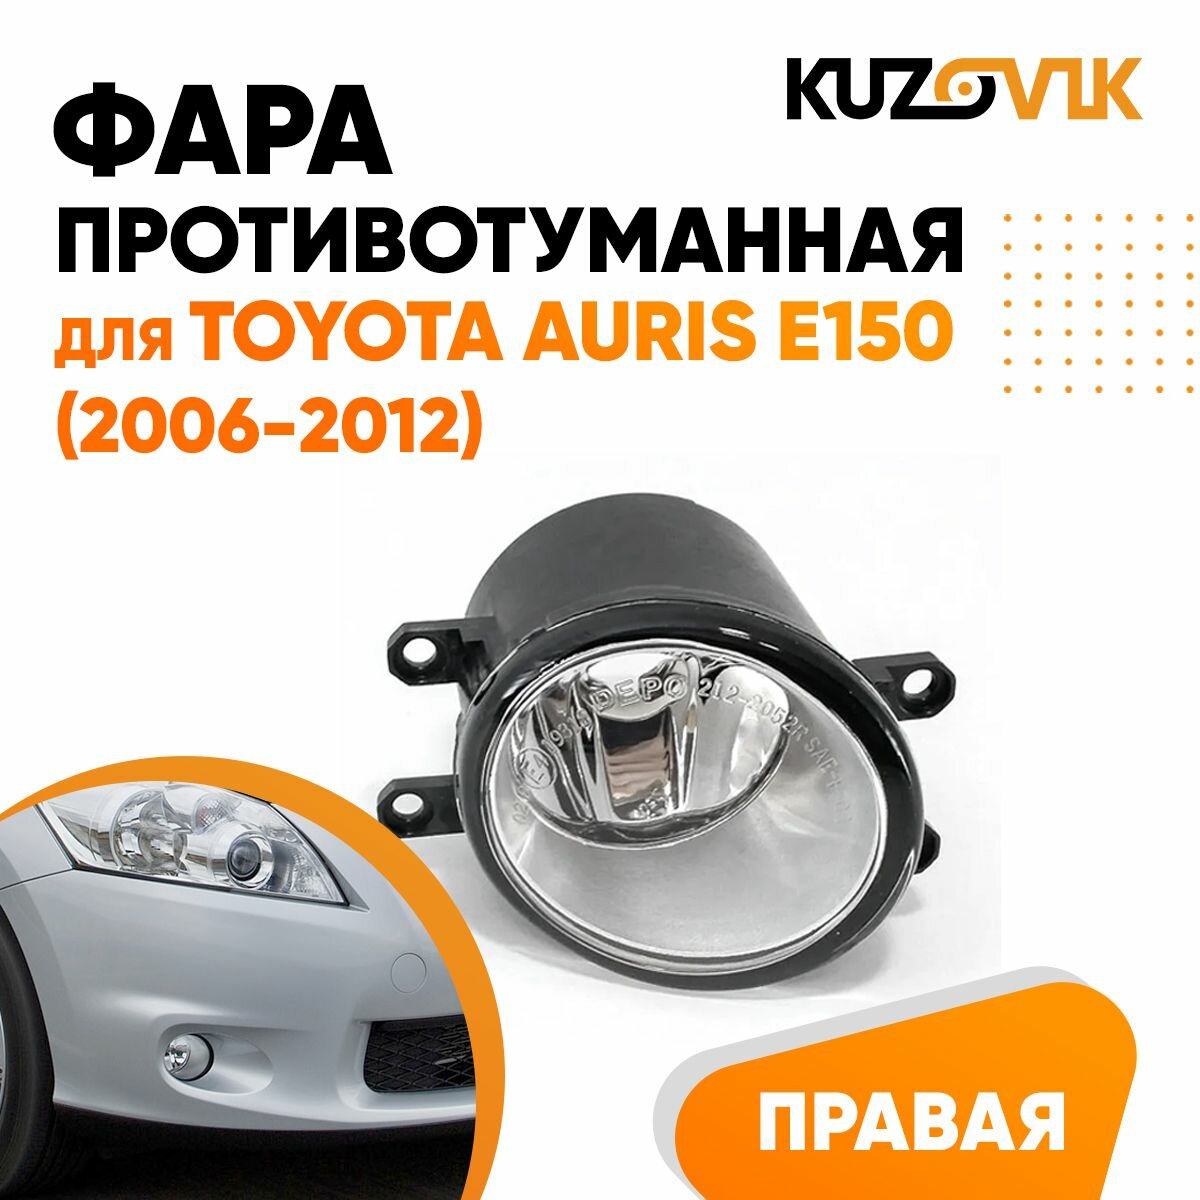 Противотуманная фара для Тойота Аурис Е150 Toyota Auris E150 (2006-2012) правая, птф, туманка